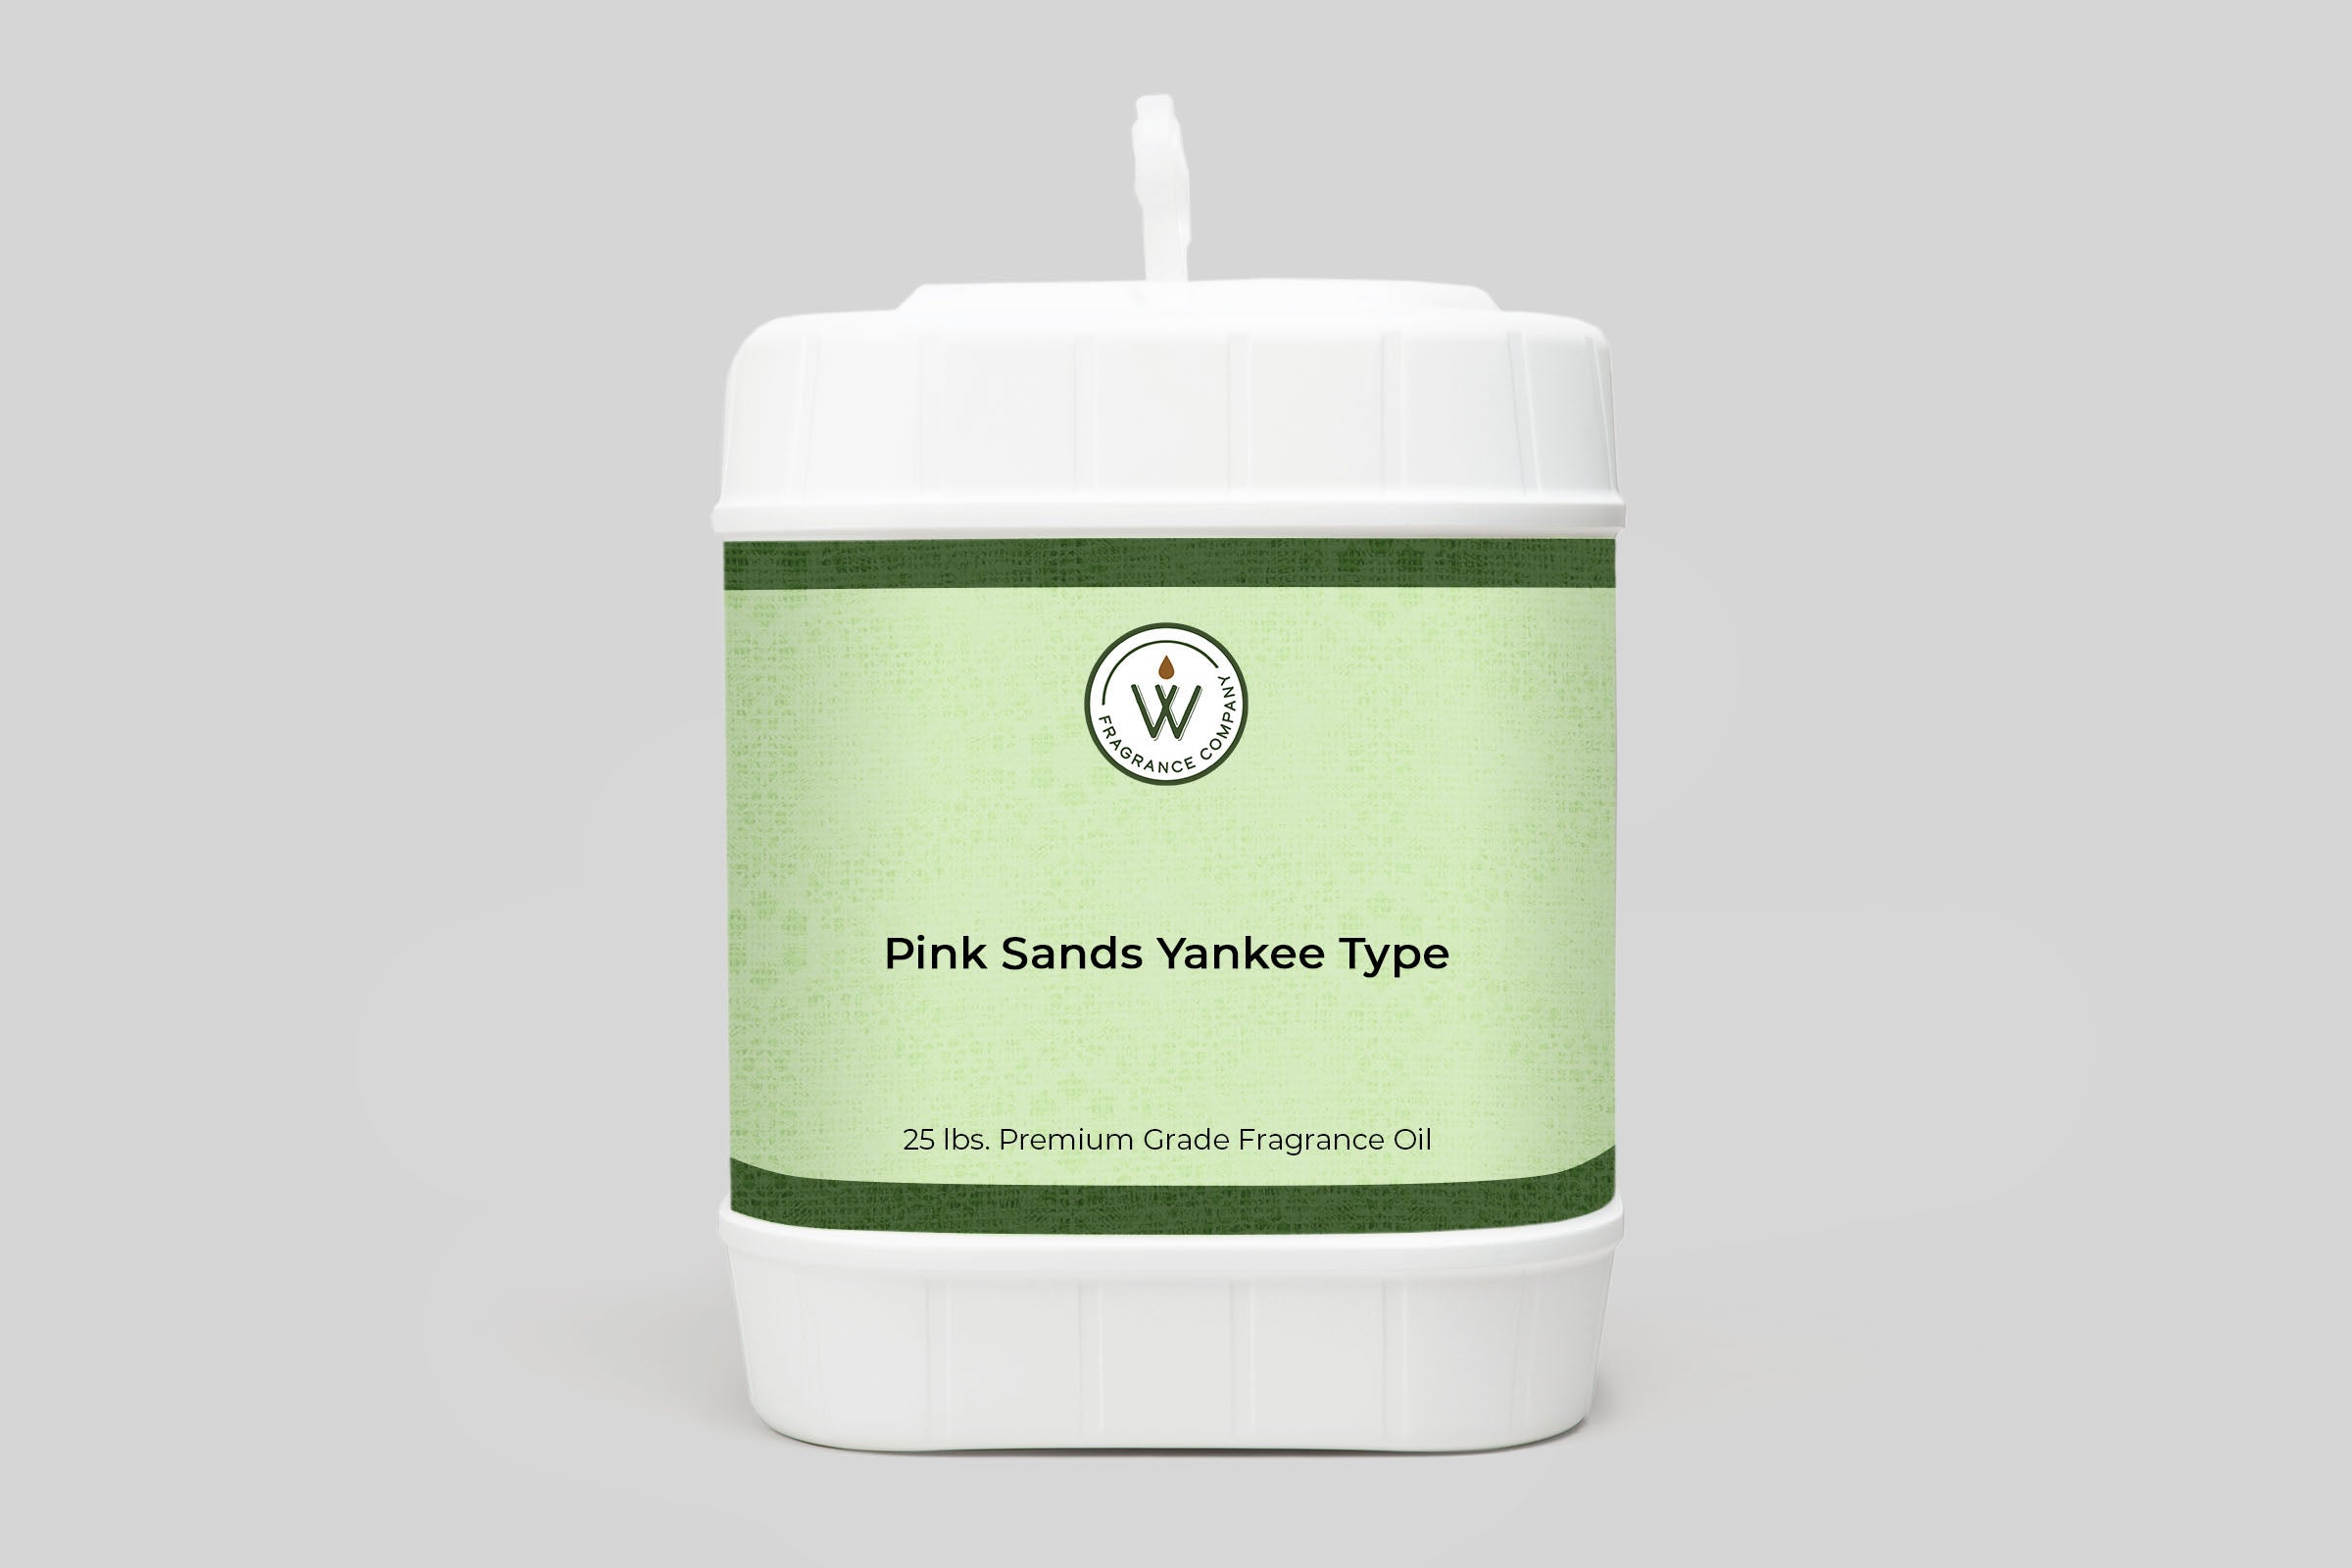 Pink Sands Yankee Type Fragrance Oil